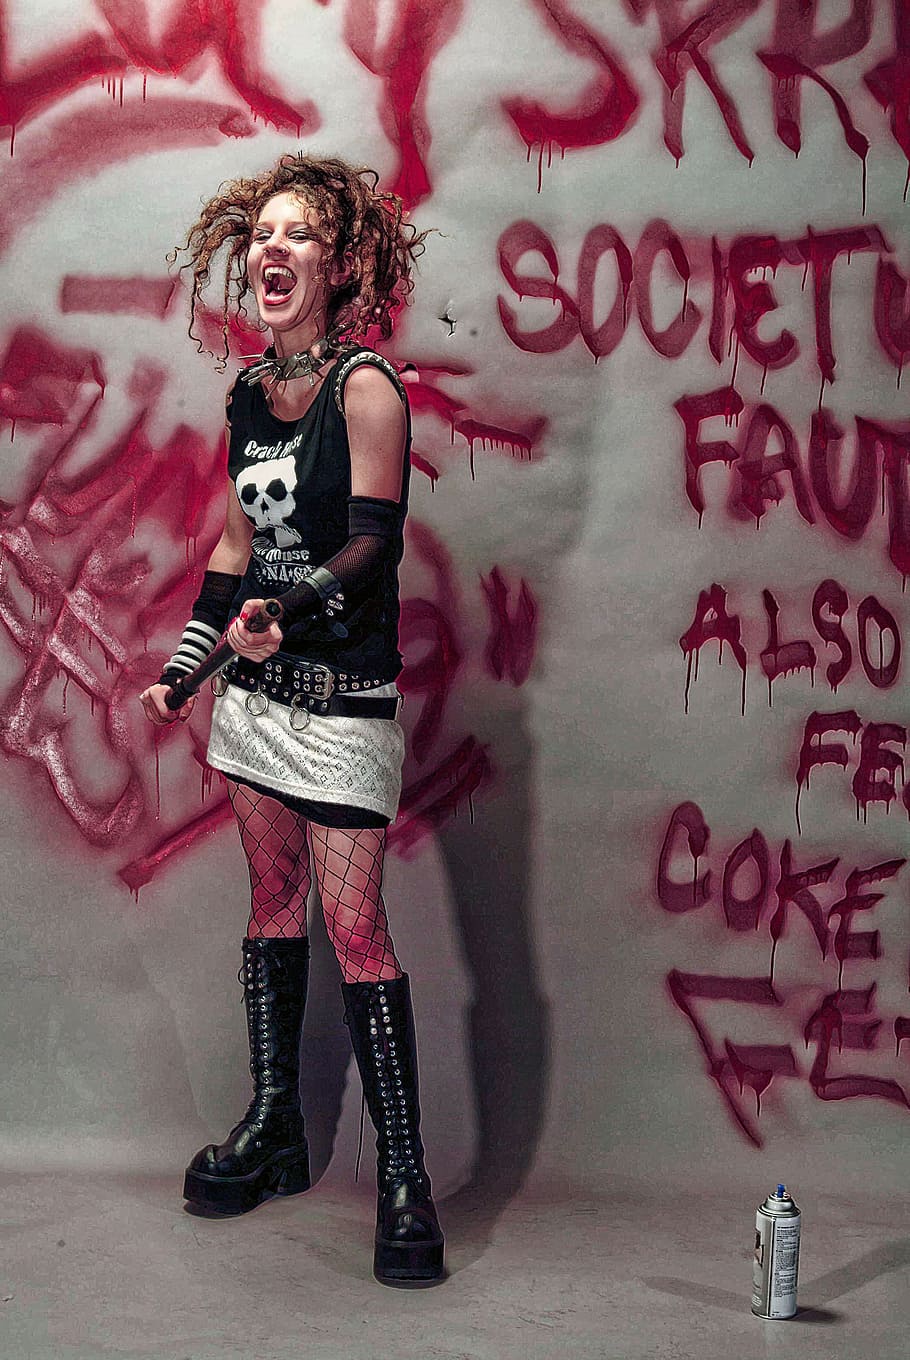 woman, standing, holding, bat, laughing, graffiti, spray paint, young, dreadlocks, fun